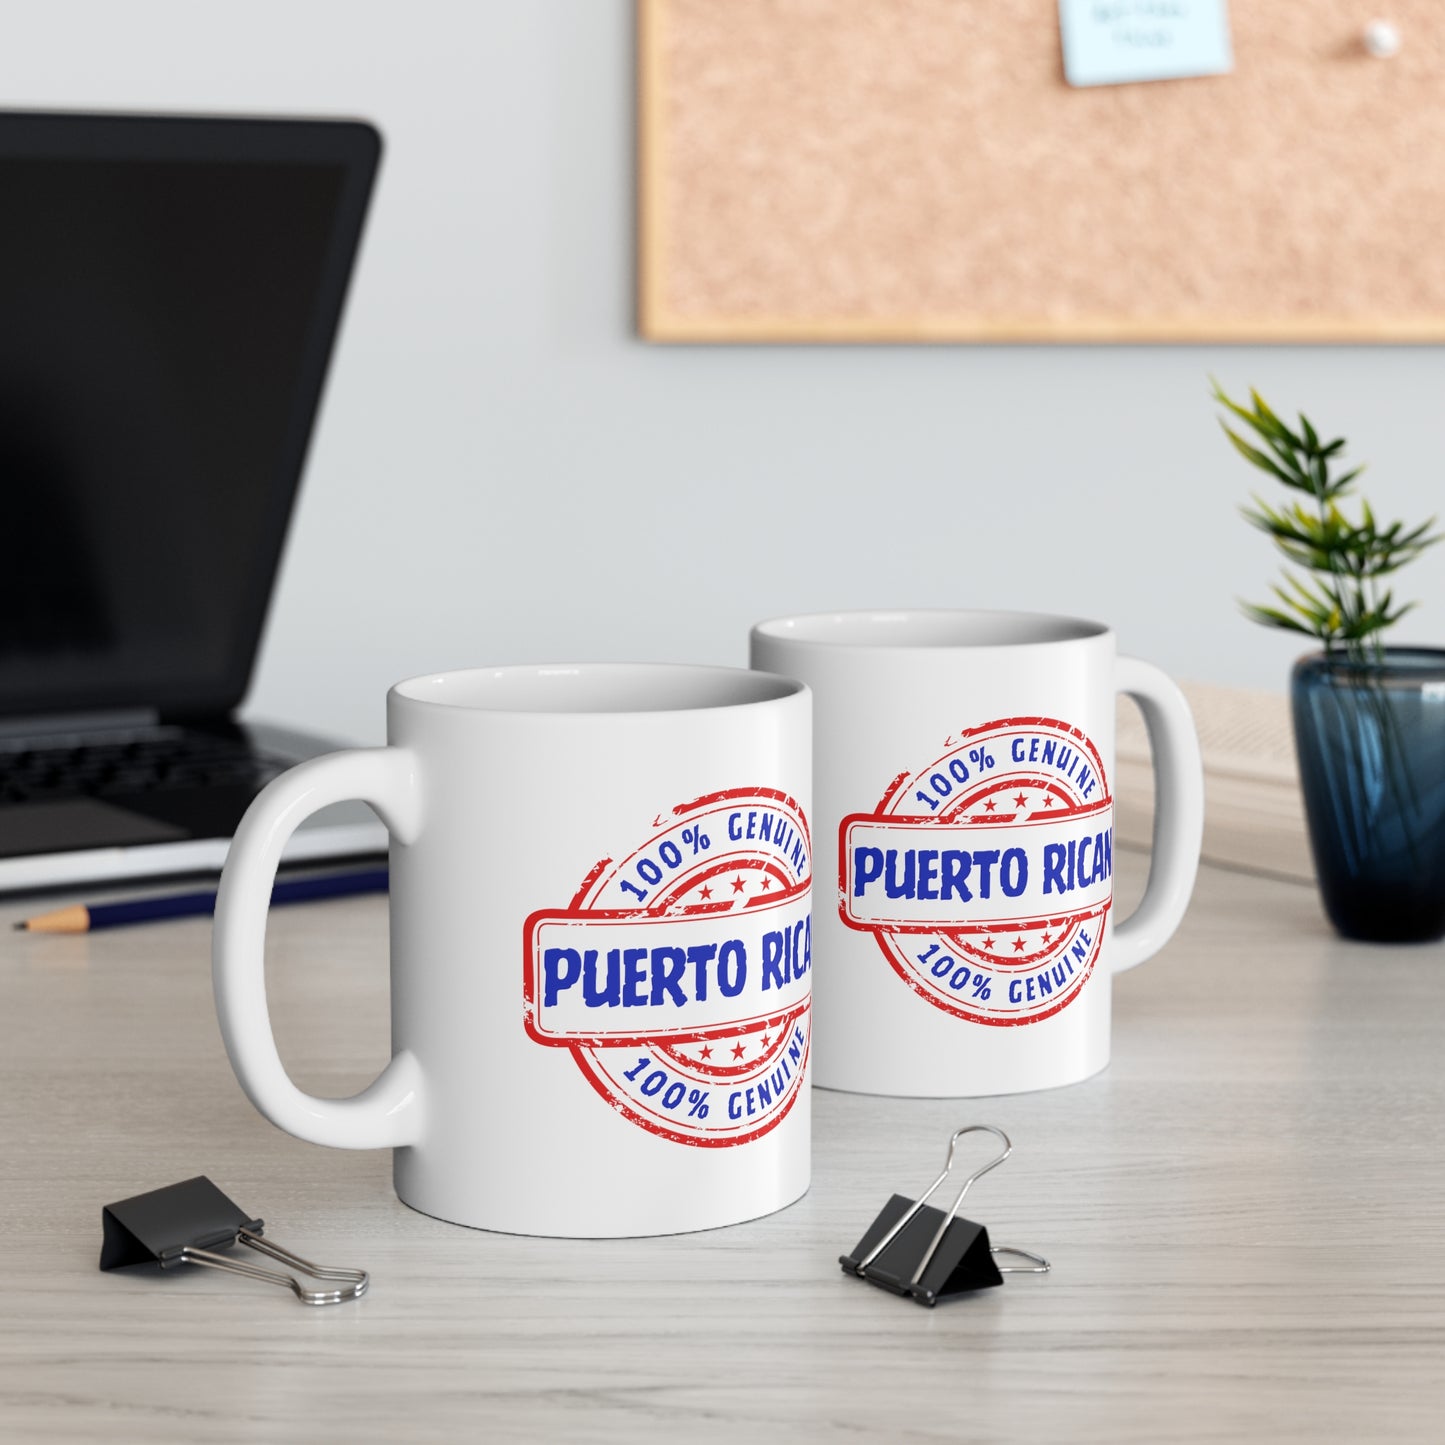 Puerto Rican Stamp Ceramic Mug 11oz